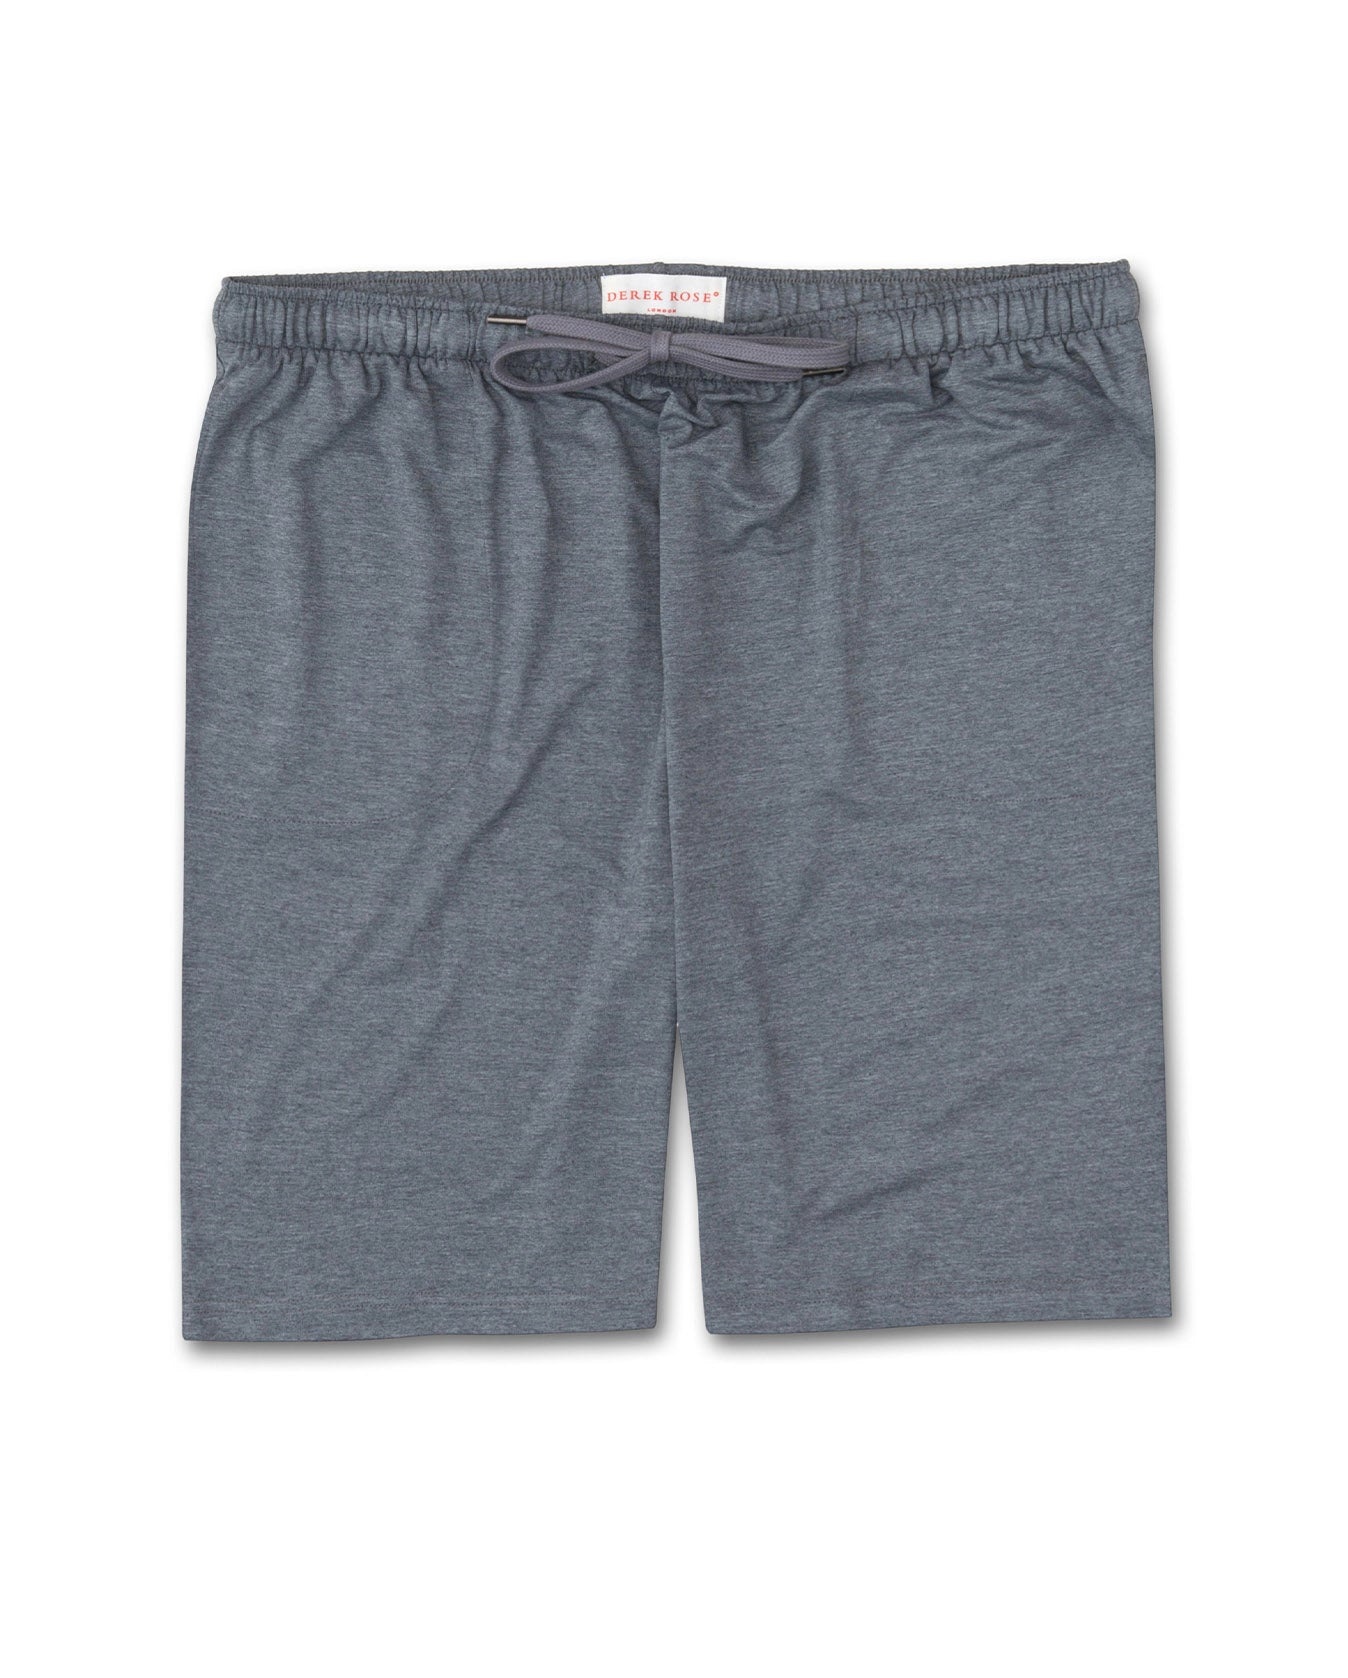 Marlowe Micro Modal Shorts - Charcoal - 1